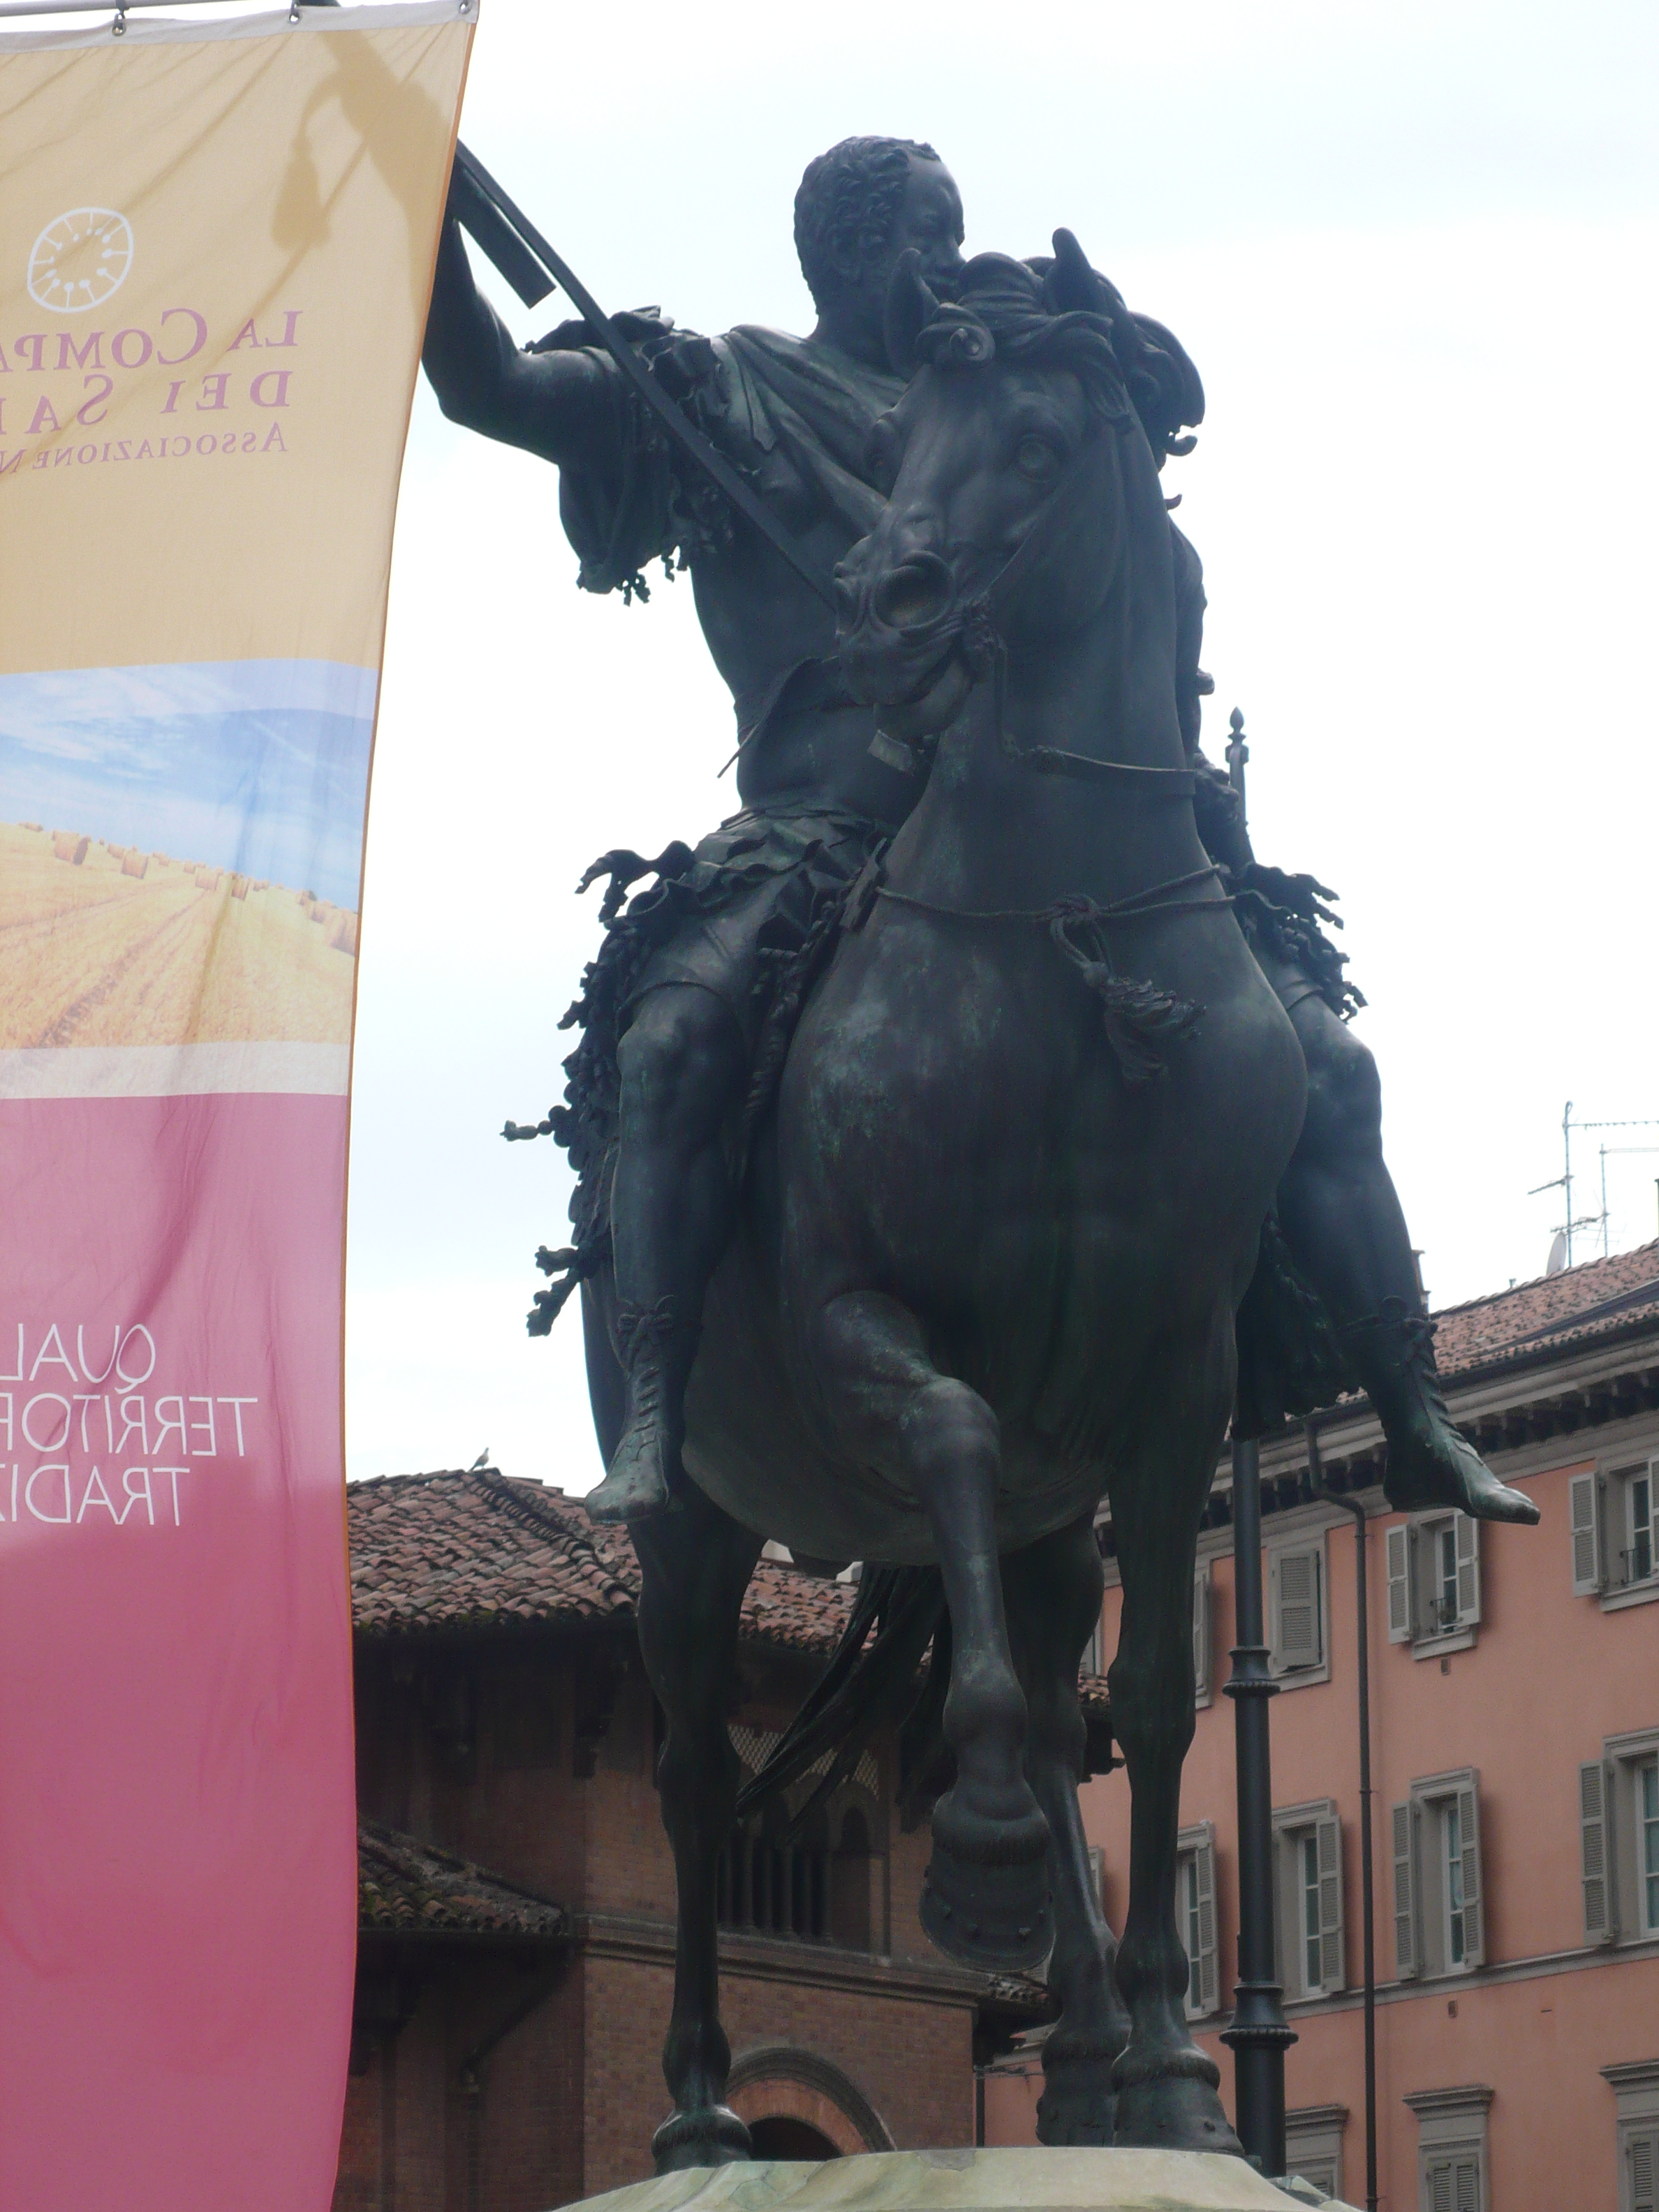 foto: https://upload.wikimedia.org/wikipedia/commons/b/b6/Statua_equestre_-_Piacenza.jpg